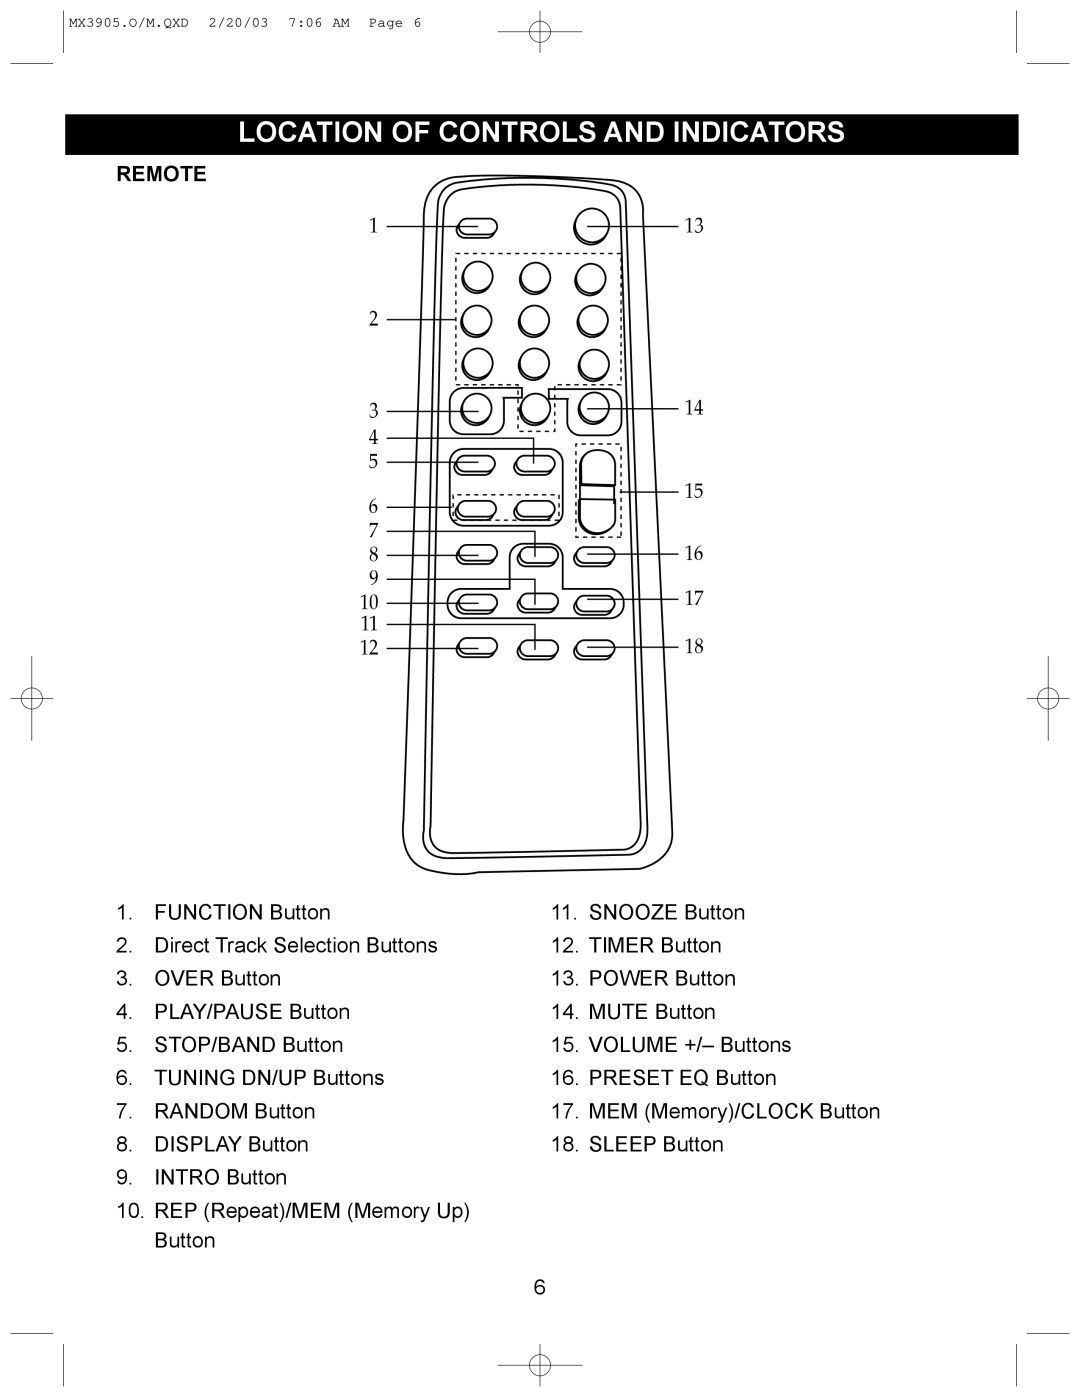 Memorex MX3905 manual Remote, Location Of Controls And Indicators 